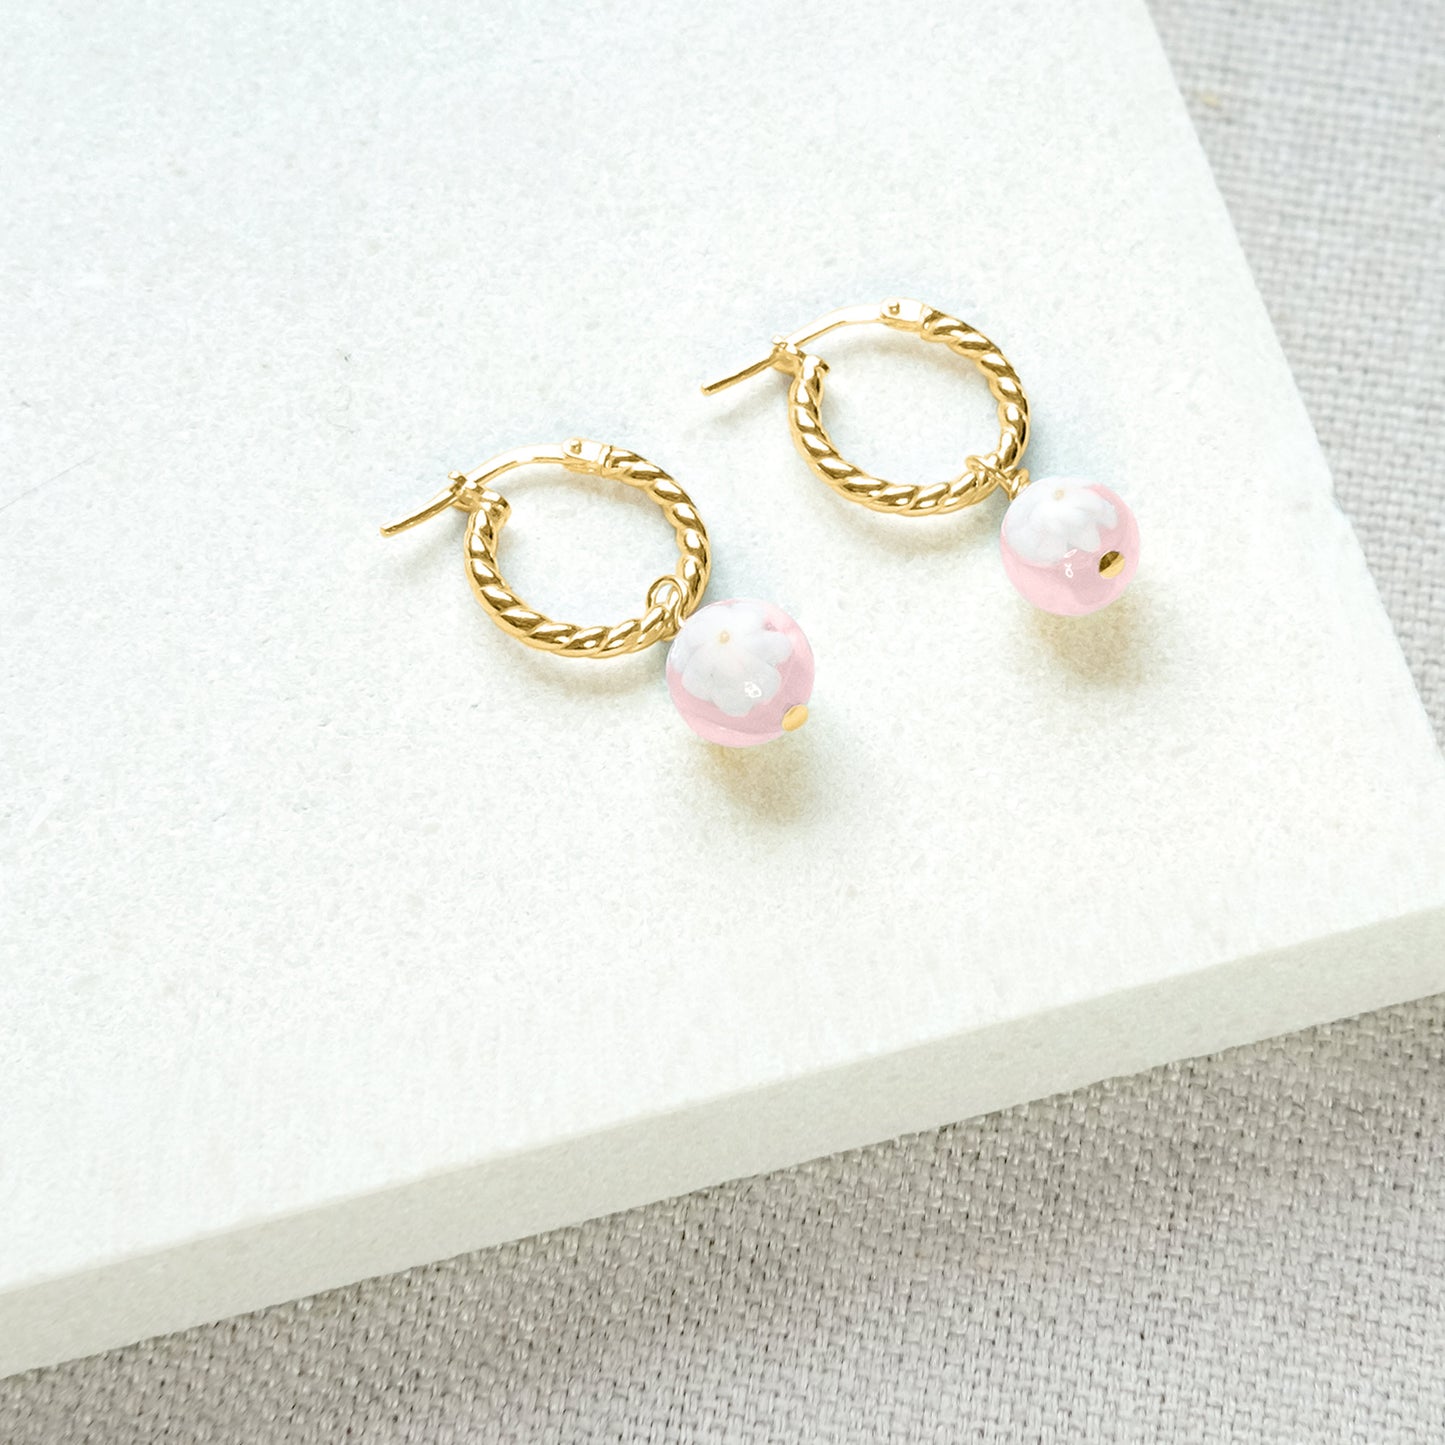 Daisy Rope Twist Hoops Earrings - Pink/Gold Vermeil